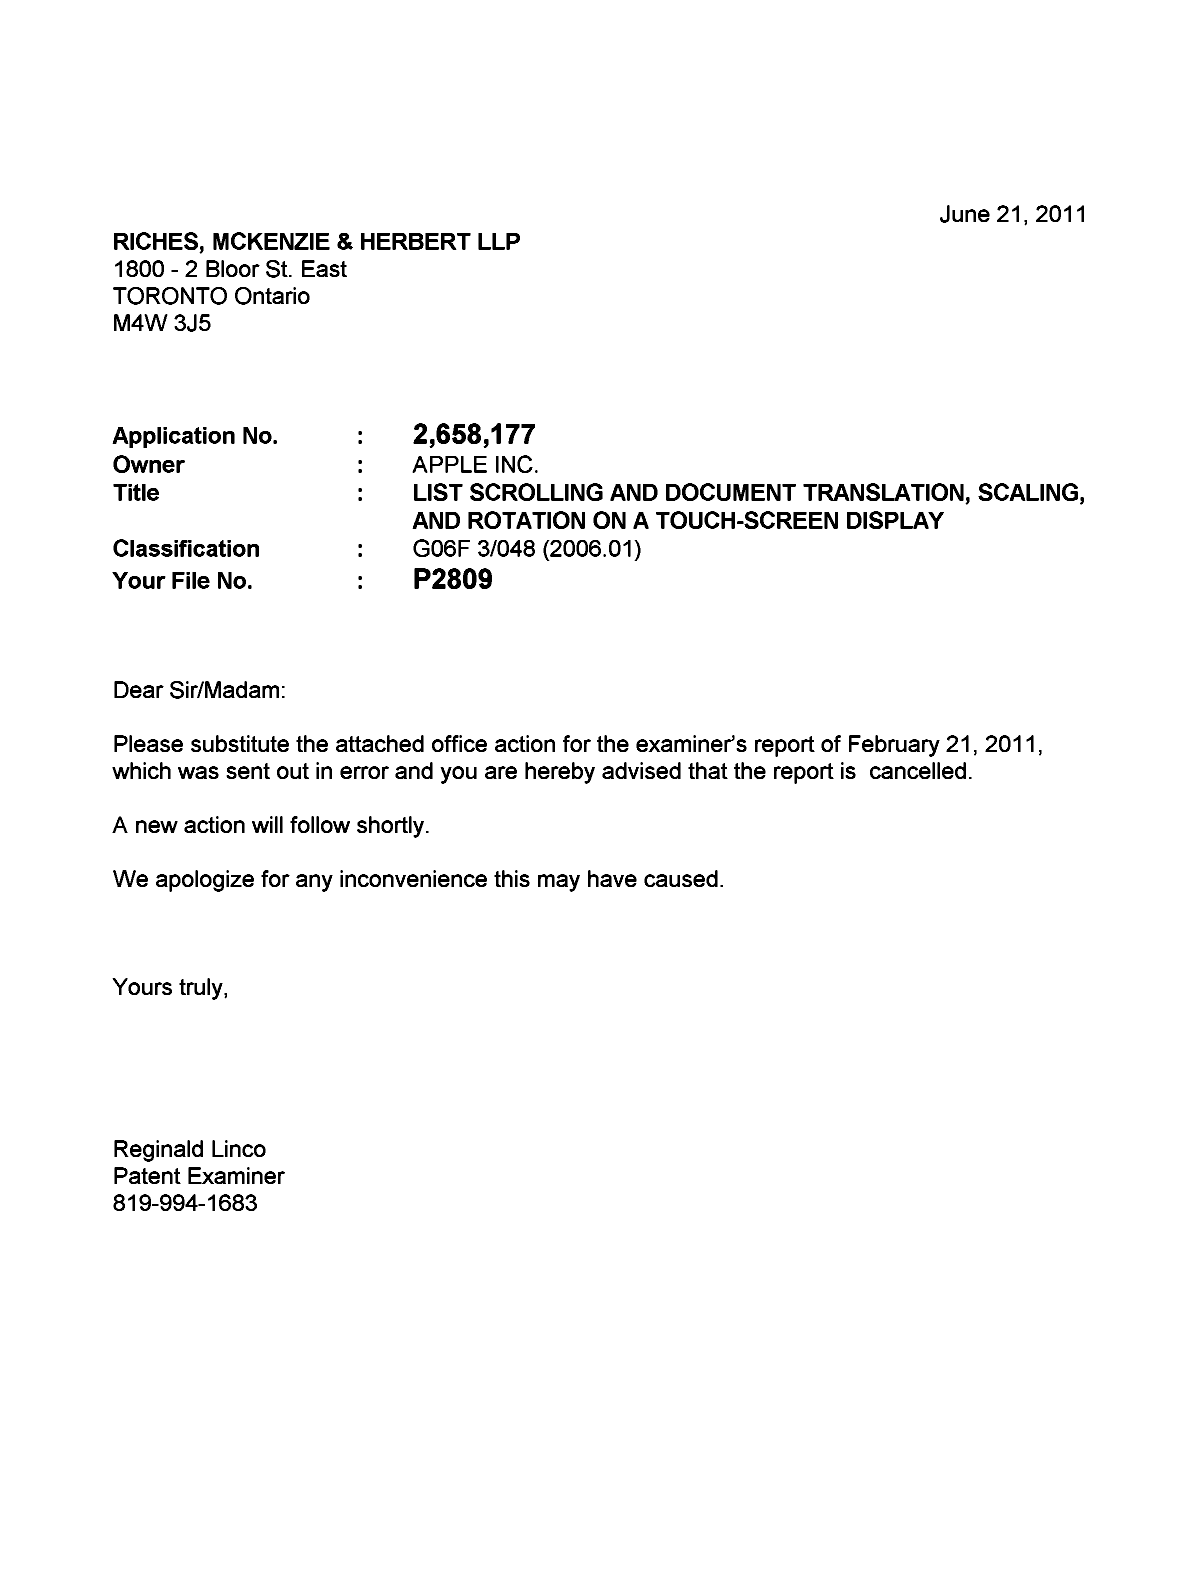 Canadian Patent Document 2658177. Correspondence 20110621. Image 1 of 1